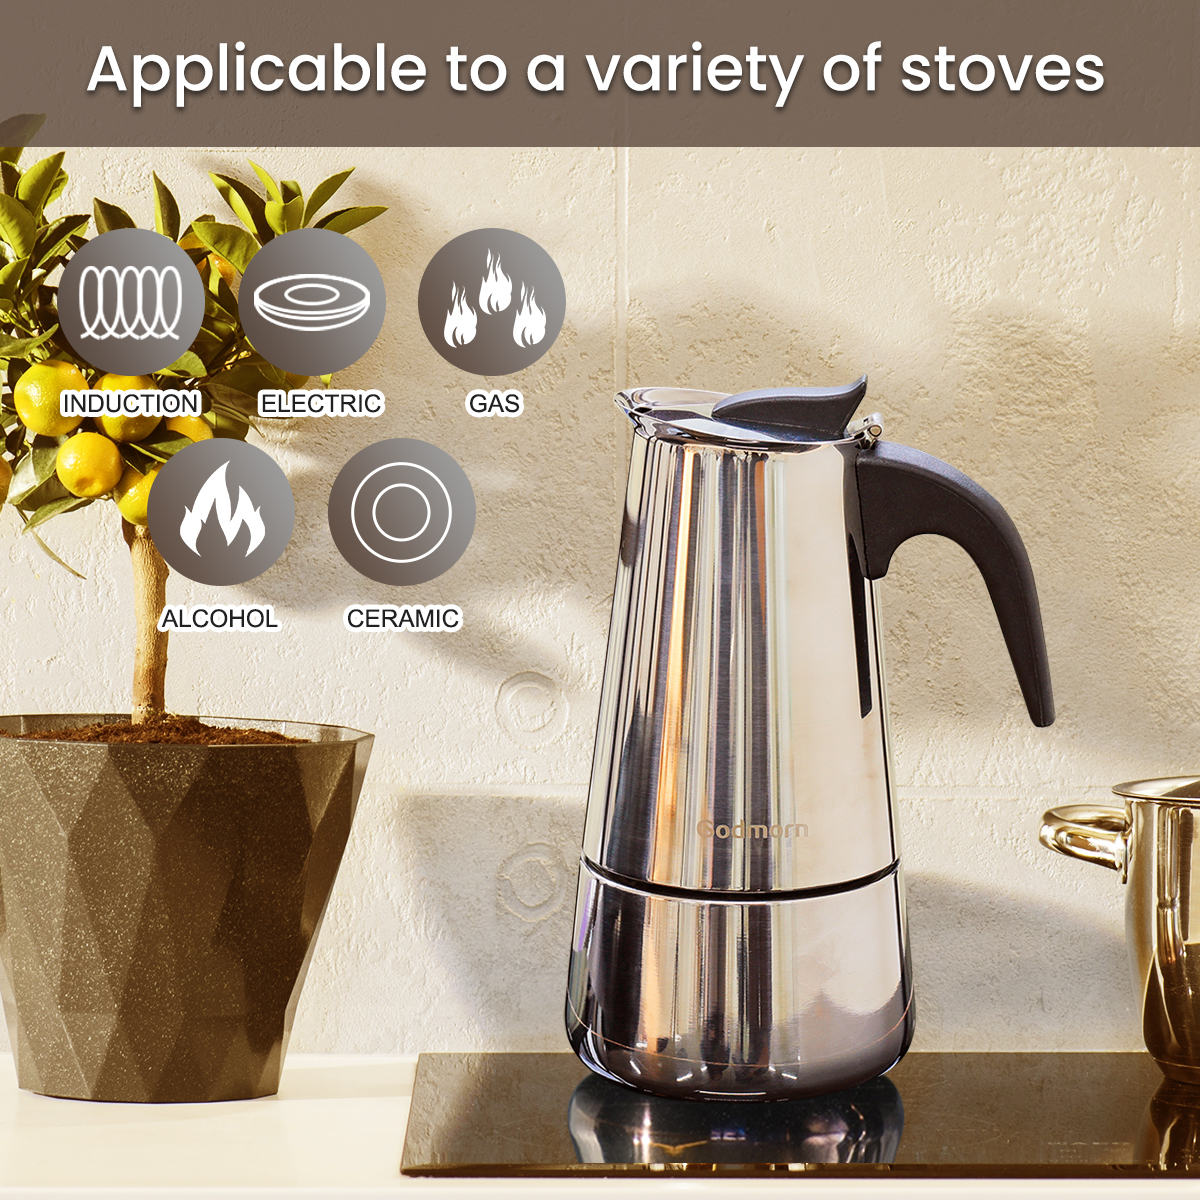 Godmorn-Stovetop-Espresso-Maker-Moka-Pot-450ml15oz9-cup-Classic-Cafe-Percolator-Maker-Stainless-Stee-1736605-5